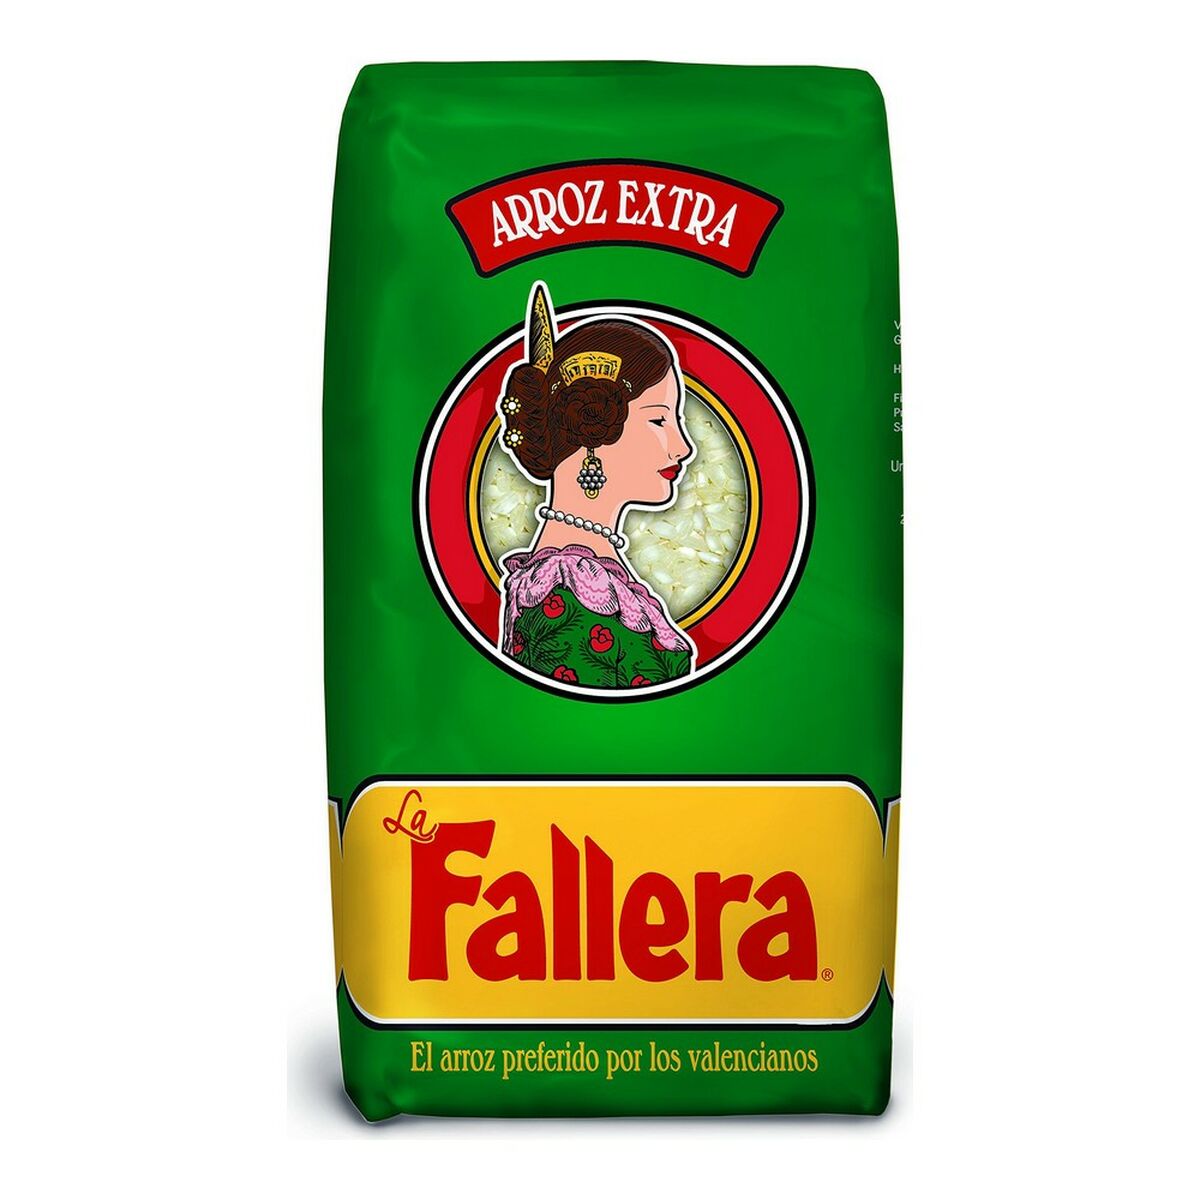 Rice La Fallera Cat. Extra (1 kg)